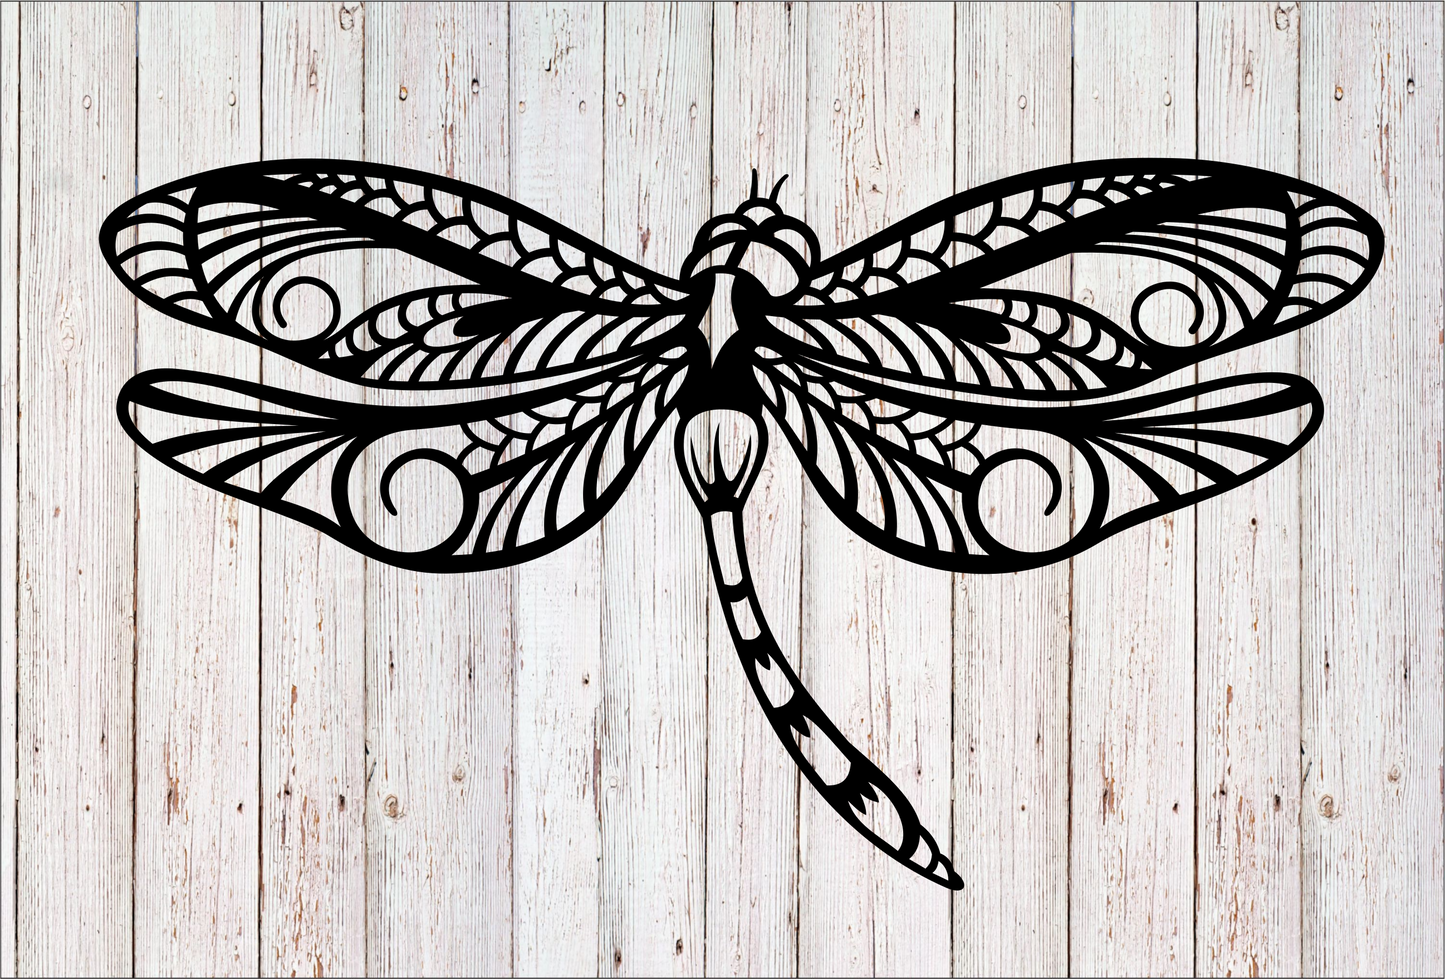 Decorative Dragonfly